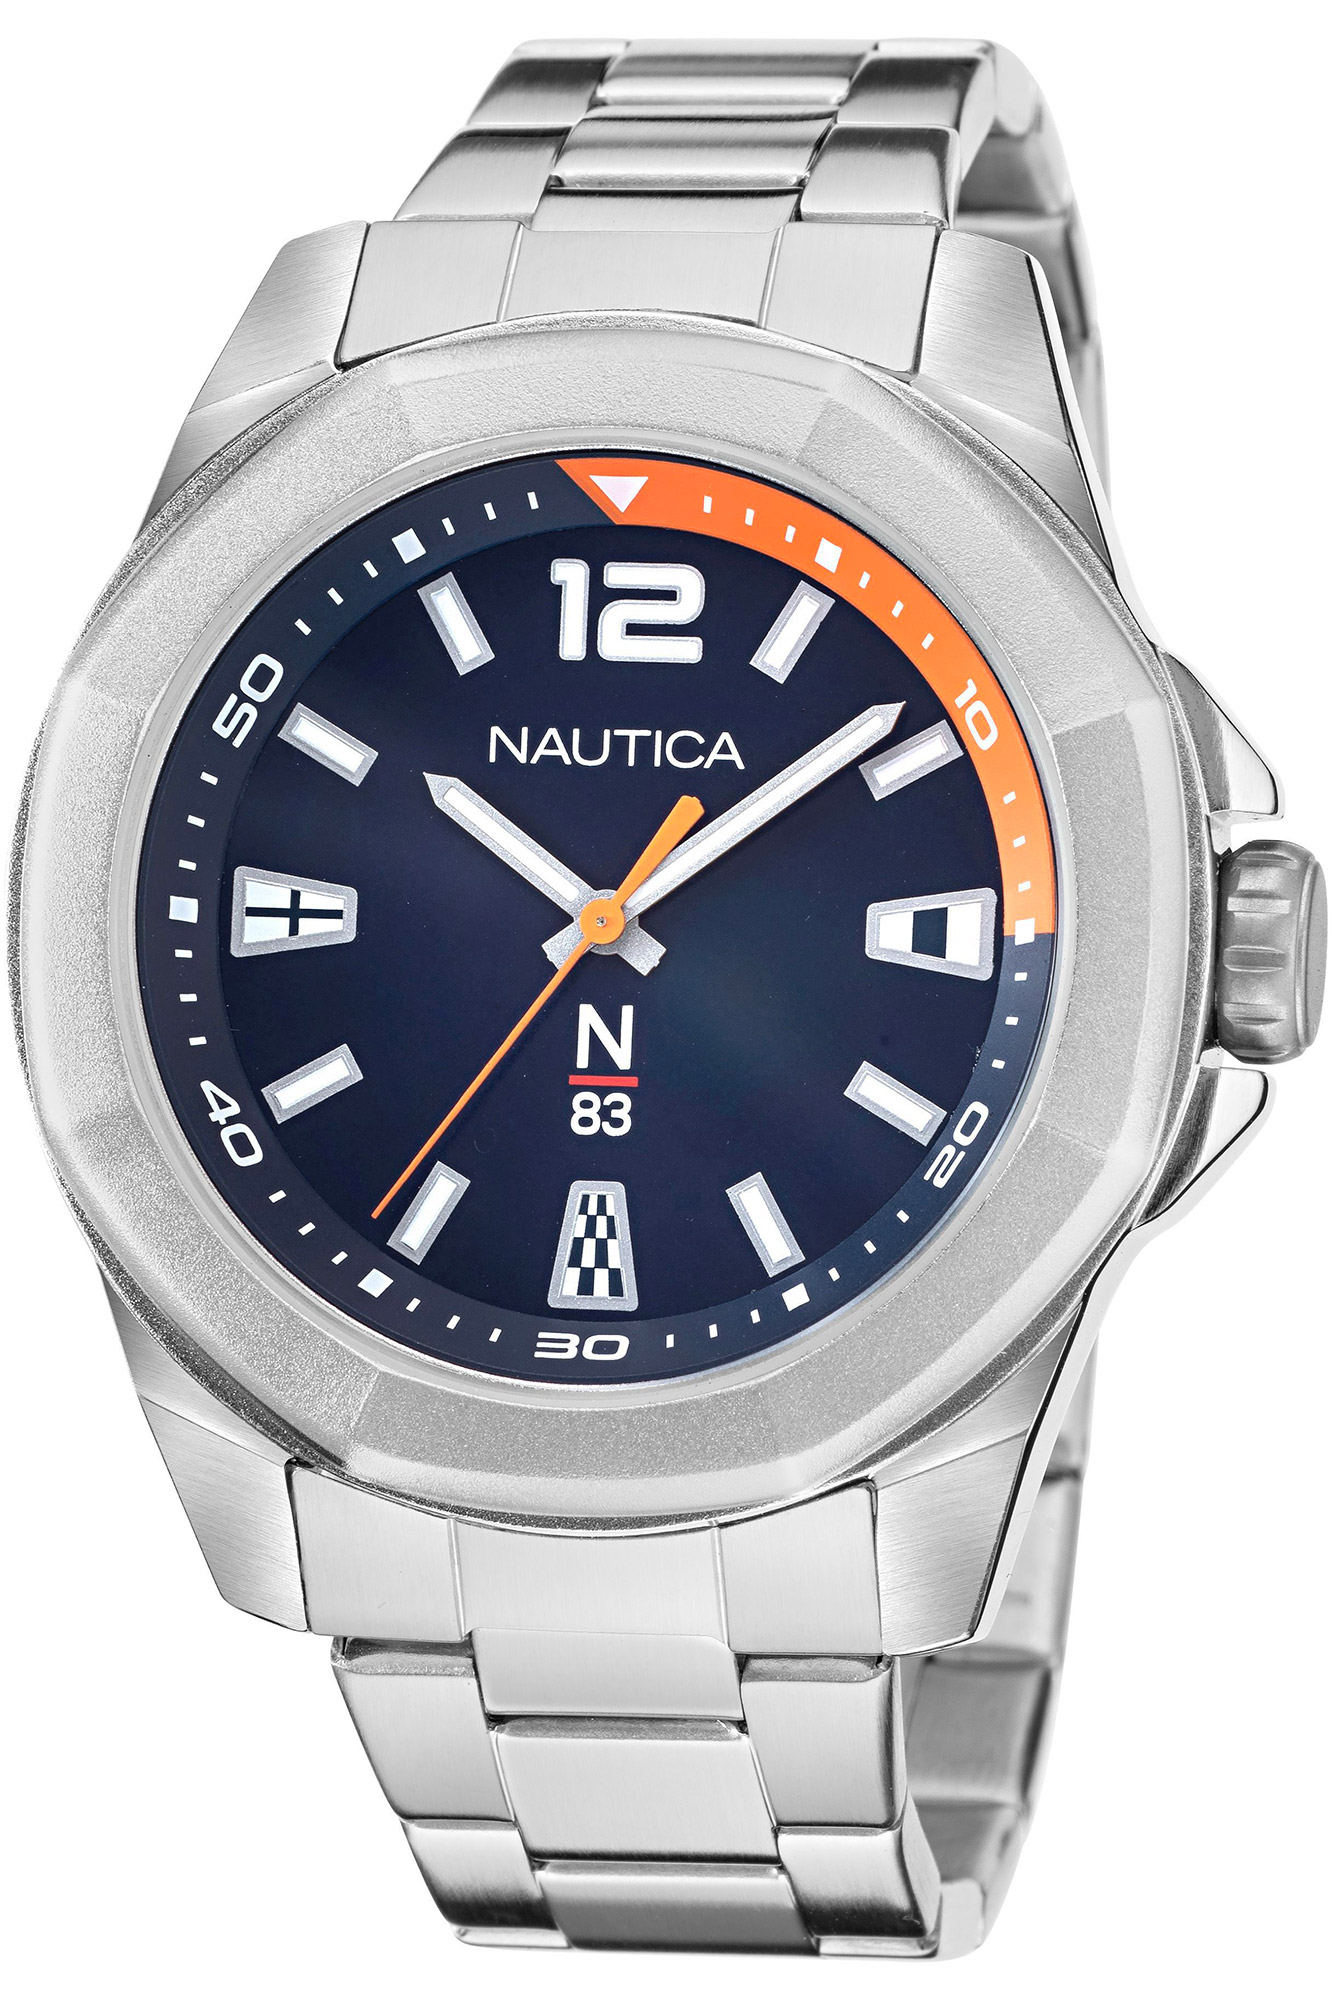 Reloj Nautica naptbf103